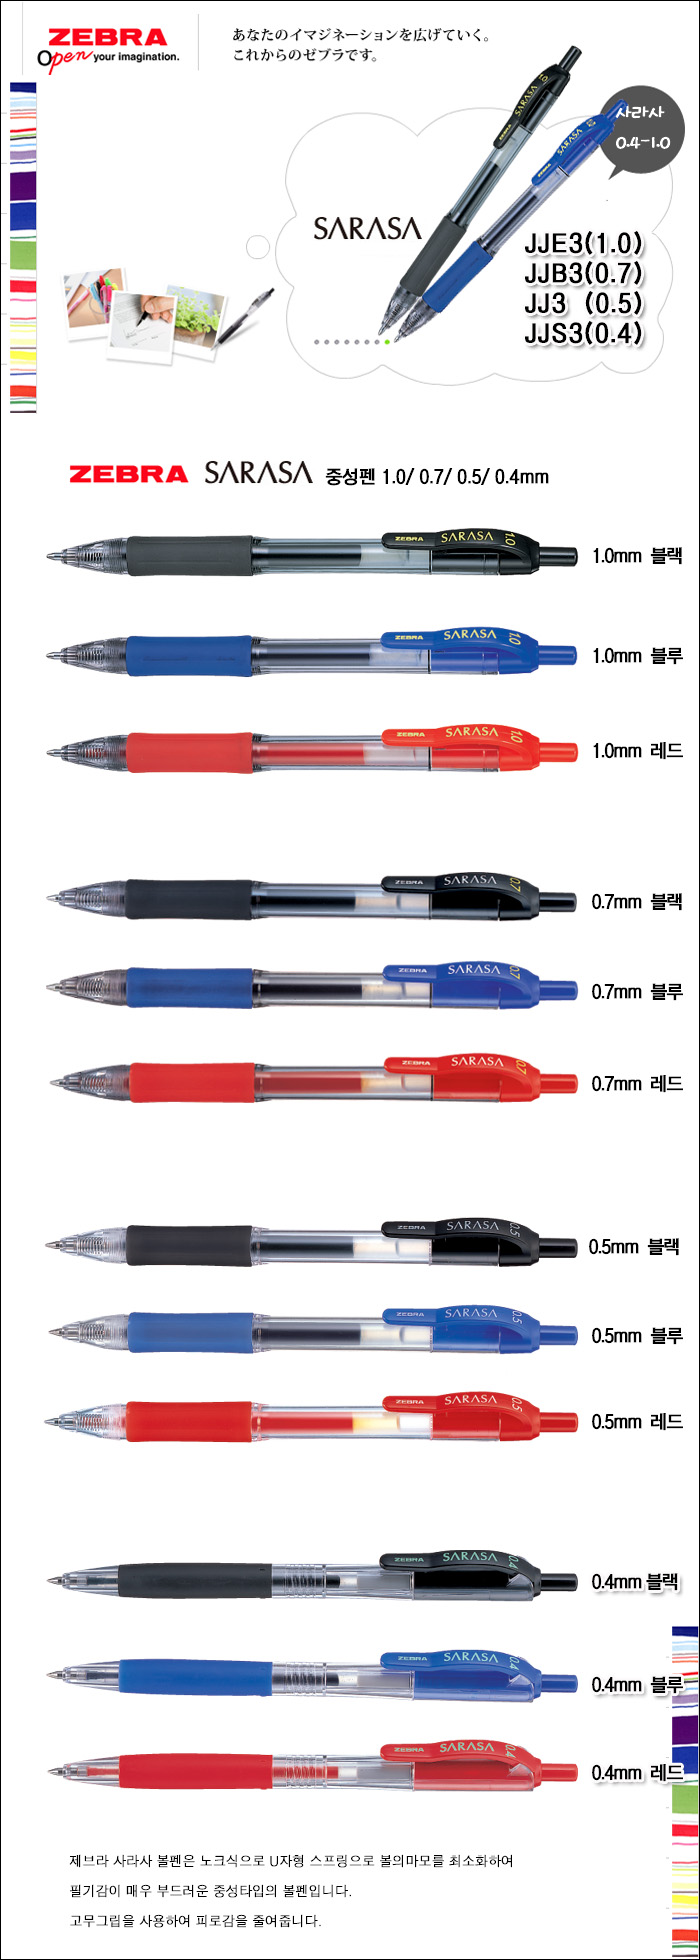 ZEBRA/SARASA Gel ink Pen [0.4/0.5/0.7/1.0mm]/